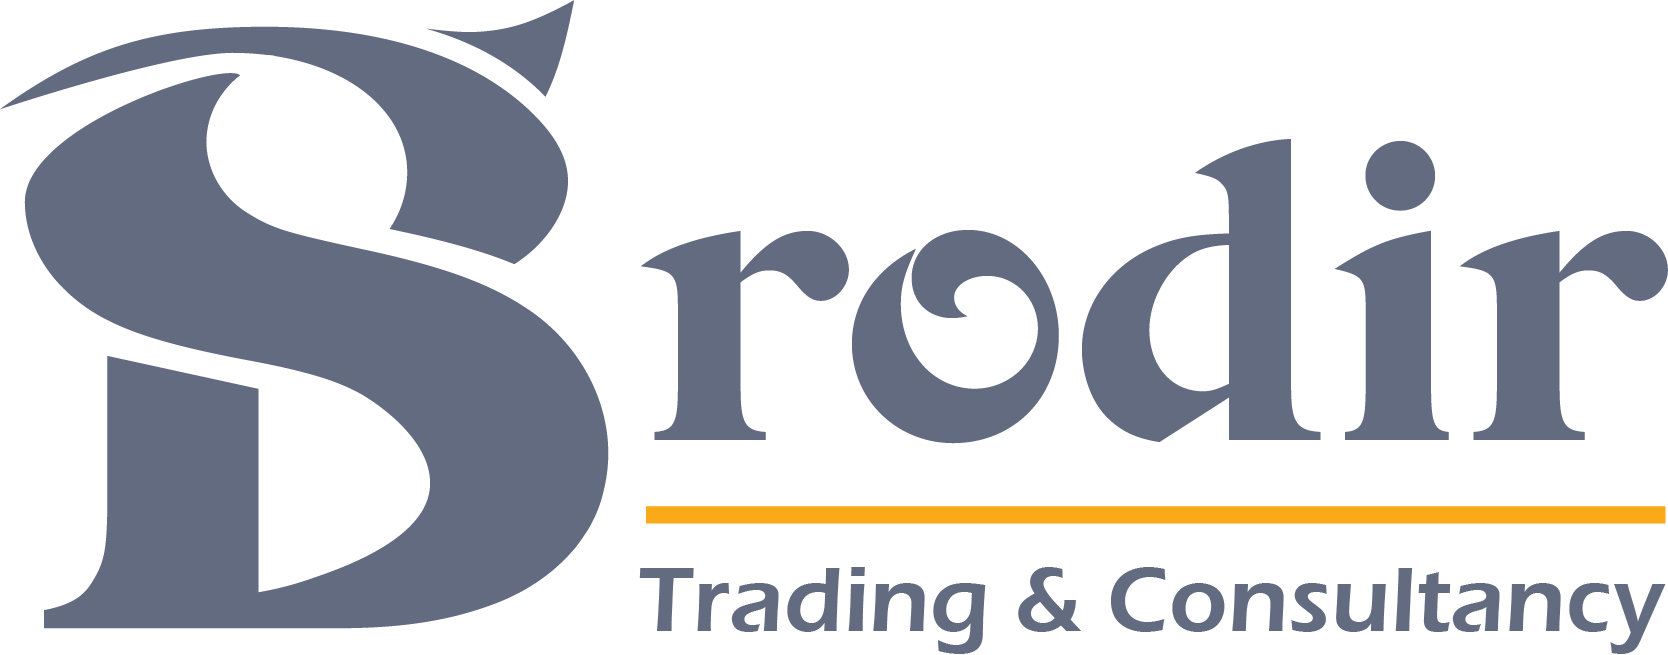 Brodir-logo